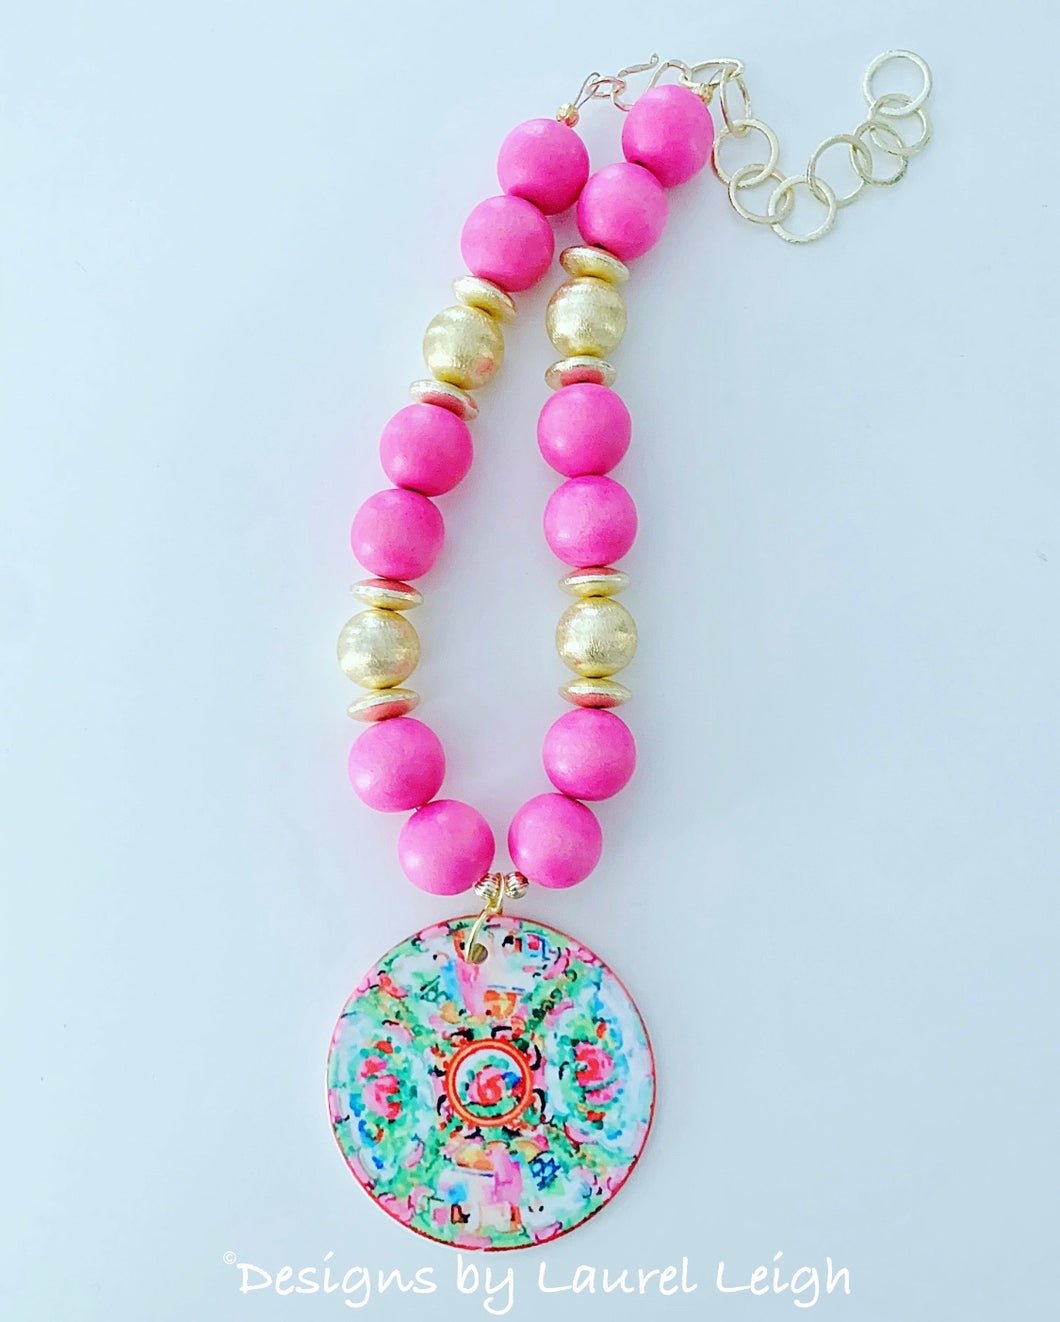 Rose Medallion Chinoiserie Pendant Necklace - Bright Bubblegum Pink - Ginger jar